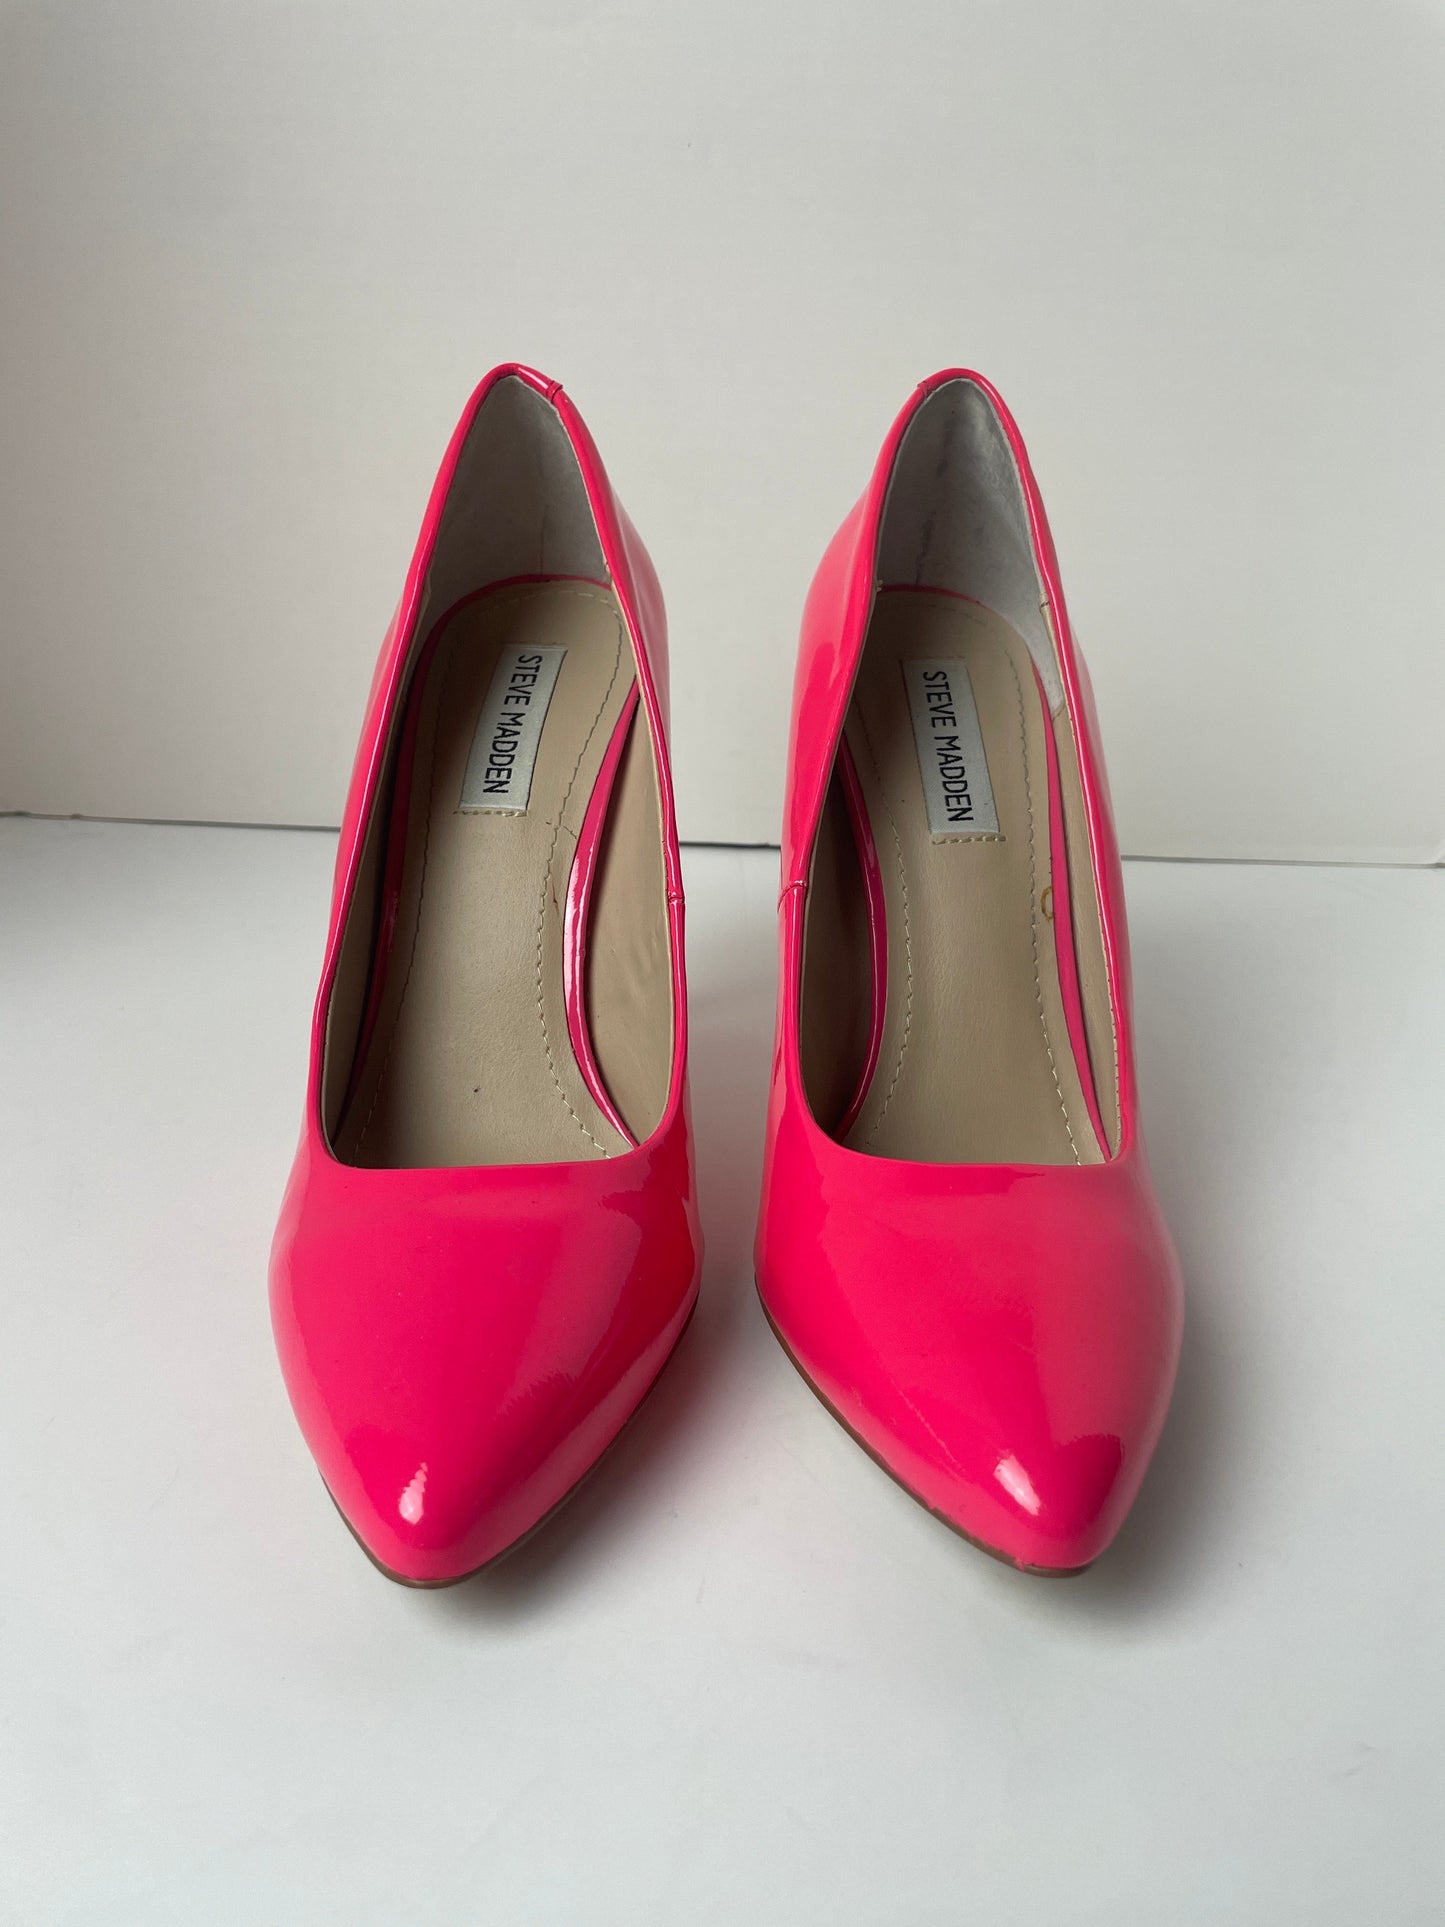 Pink Shoes Heels Stiletto Steve Madden, Size 9.5